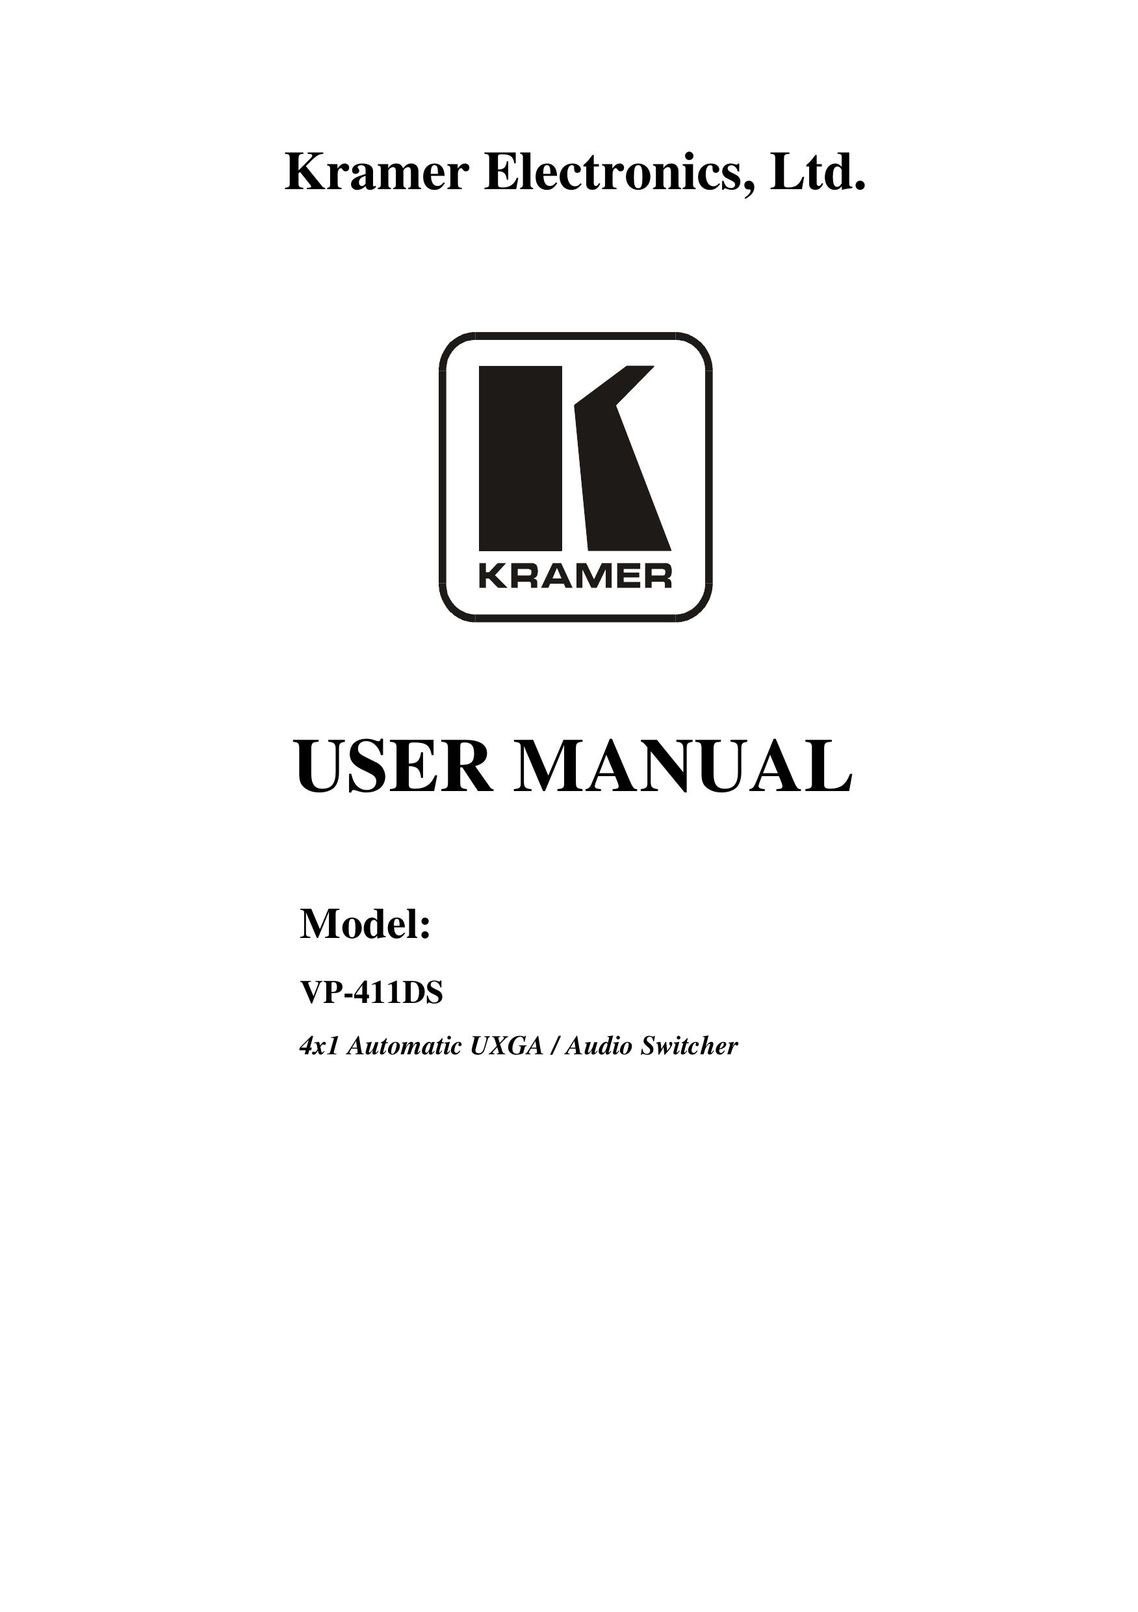 Kramer Electronics VP-411DS Home Theater System User Manual